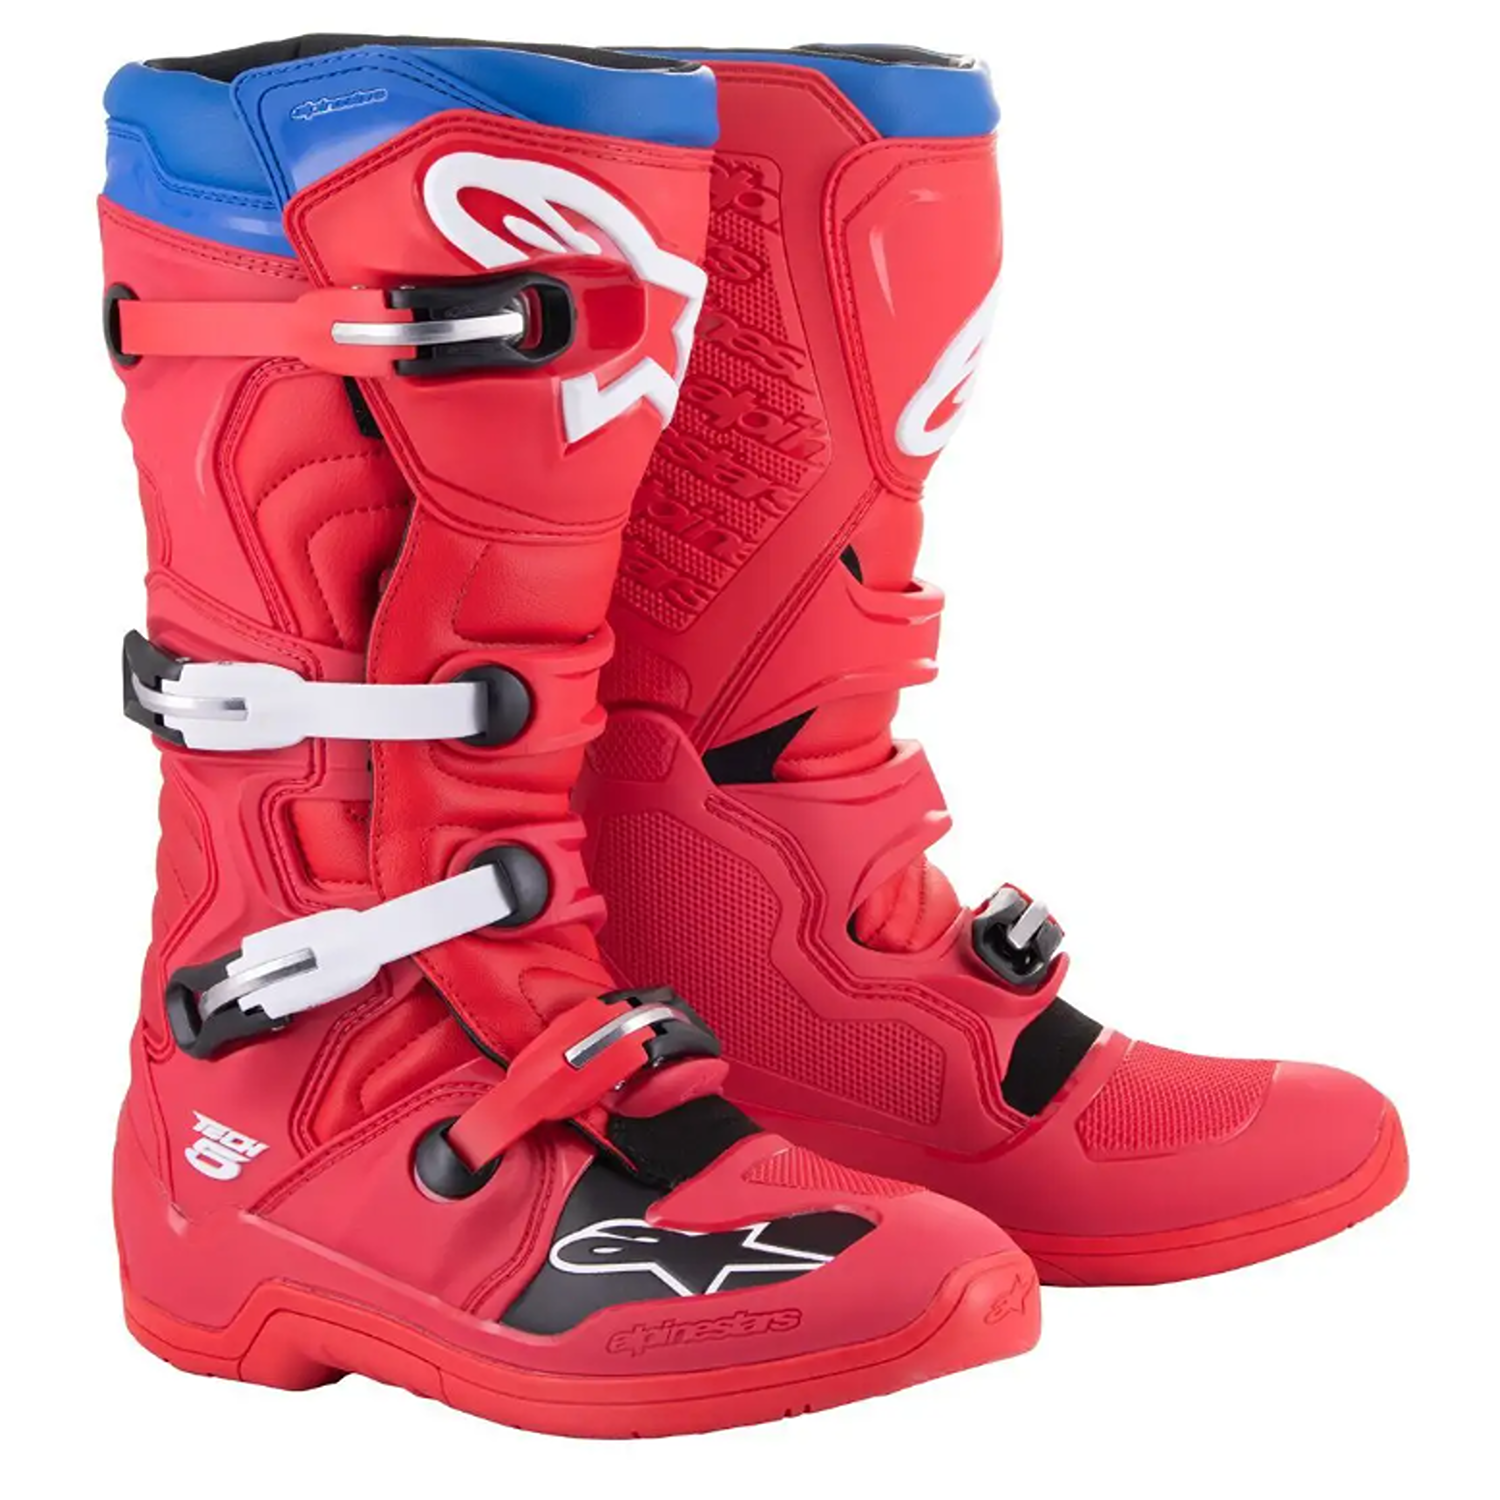 Image of Alpinestars Tech 5 Boots Bright Red Dark Red Blue Size US 8 EN